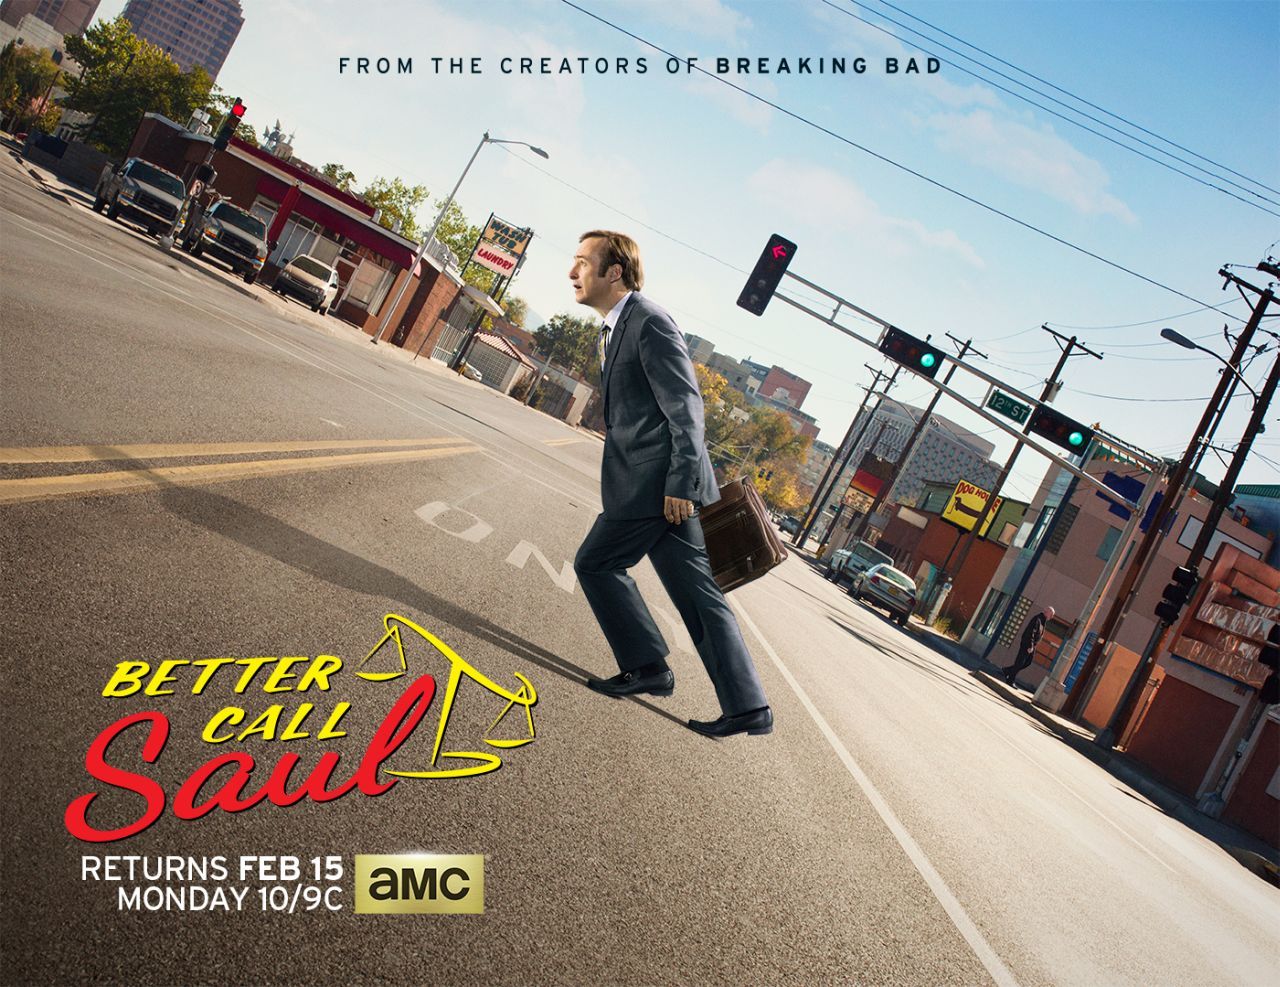 Better Call Saul Season 2 poster